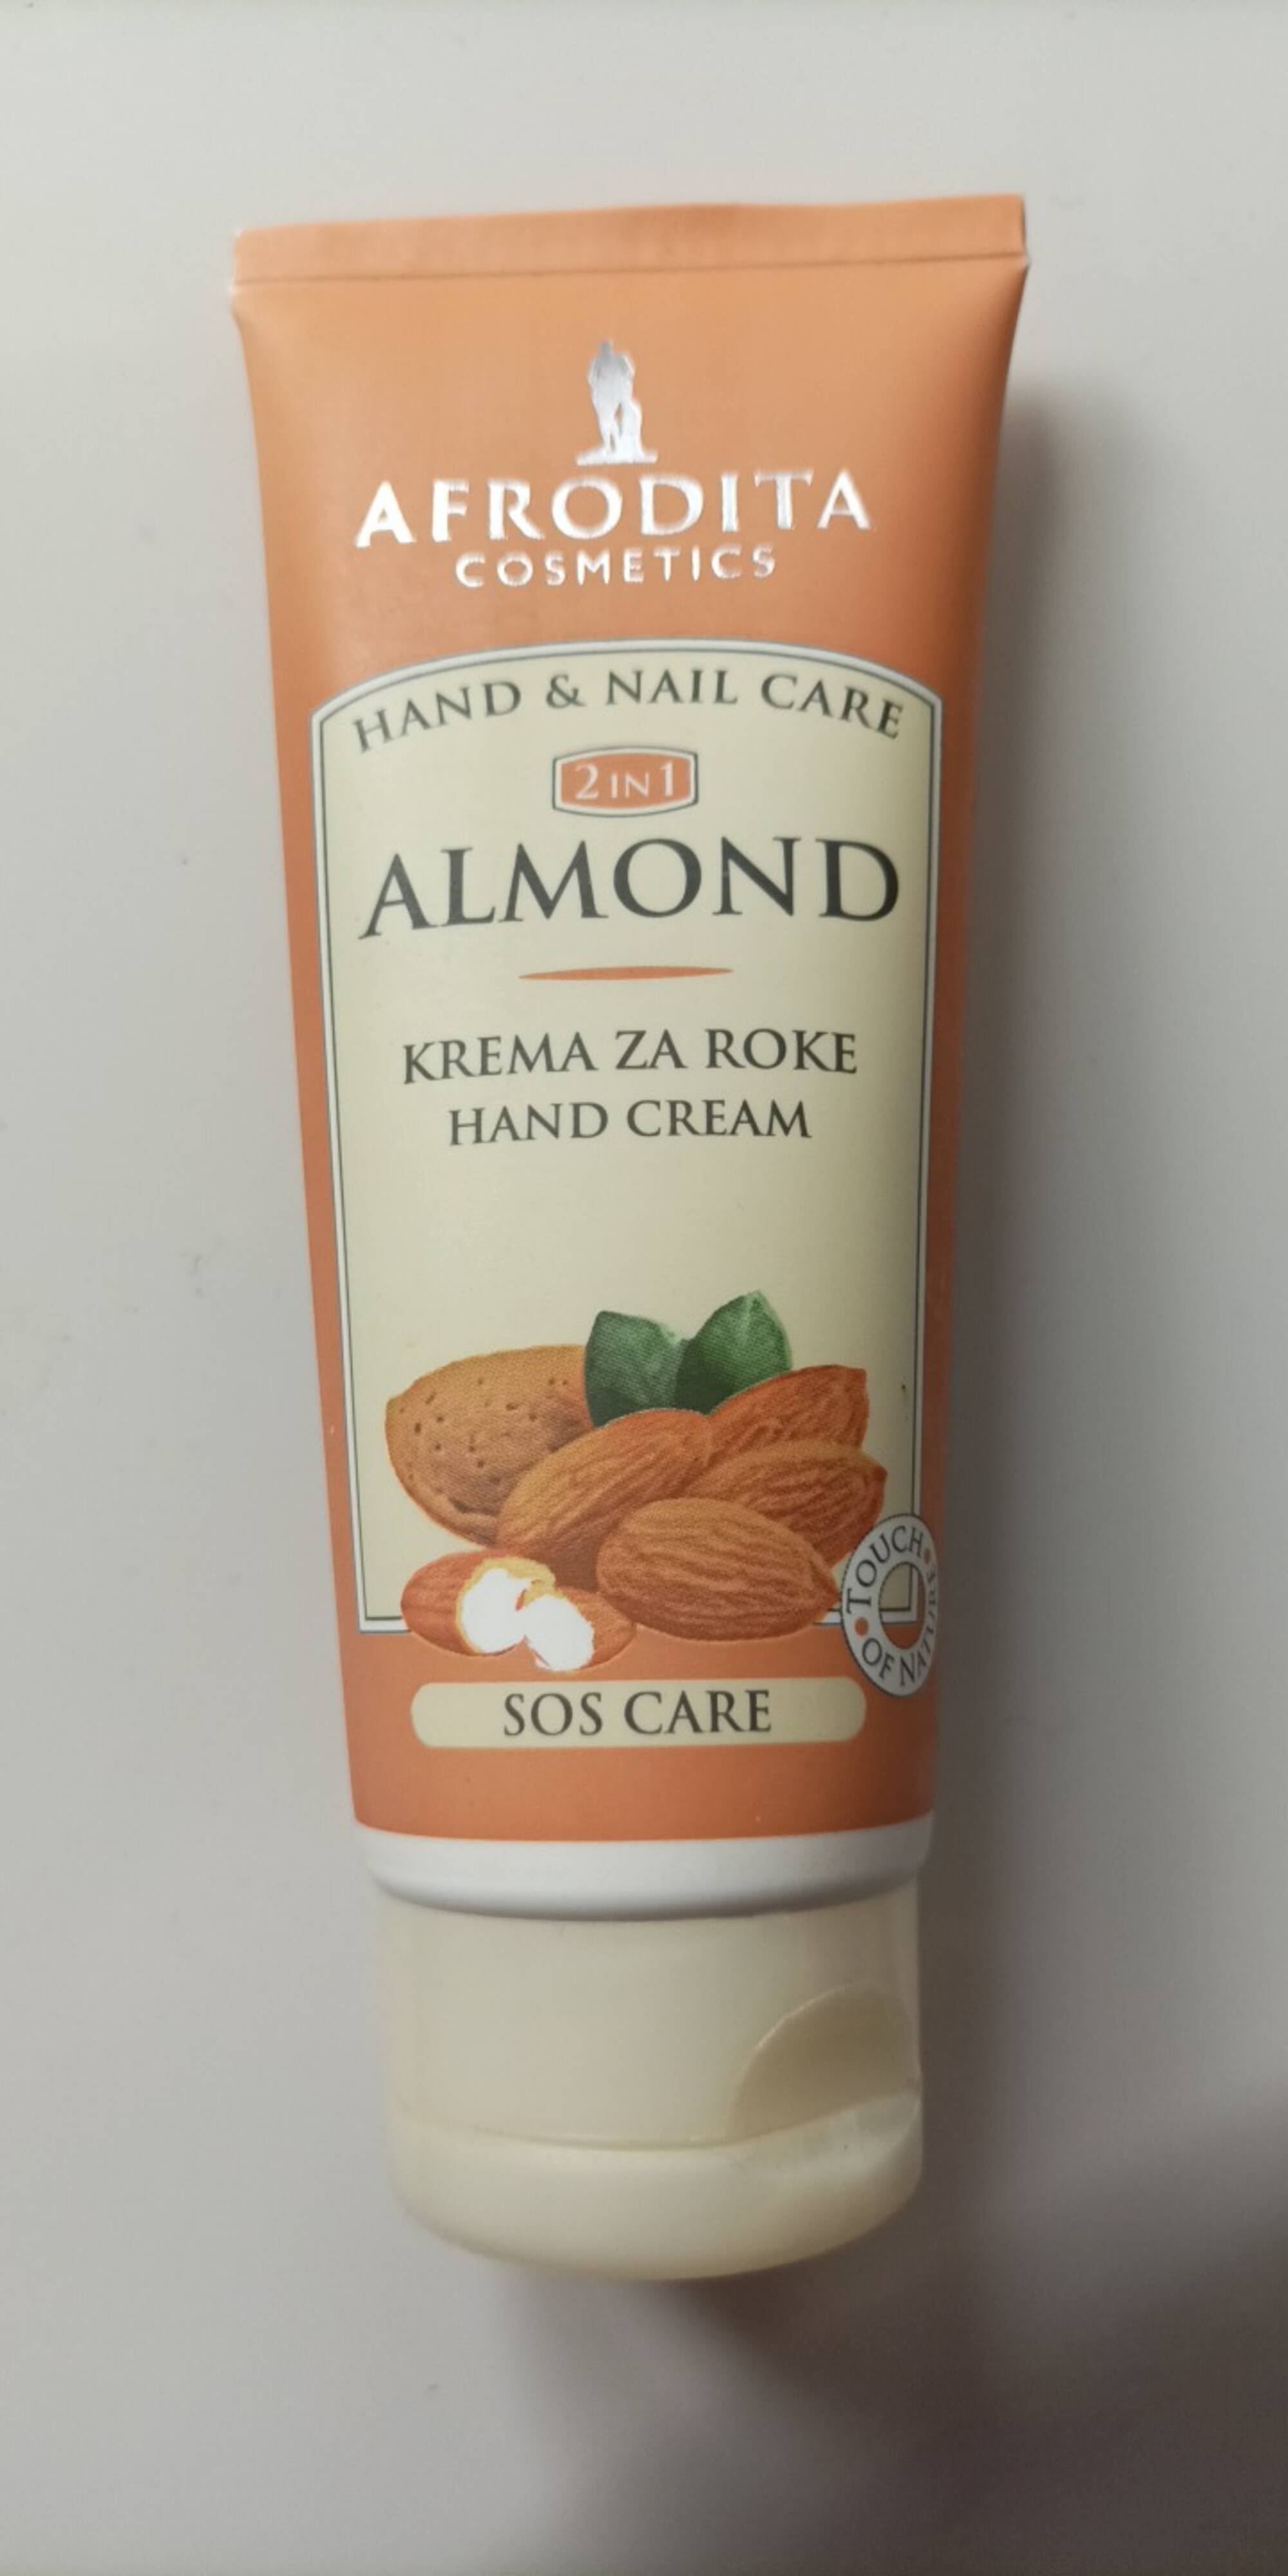 AFRODITA - Almond - Hand cream 2in 1